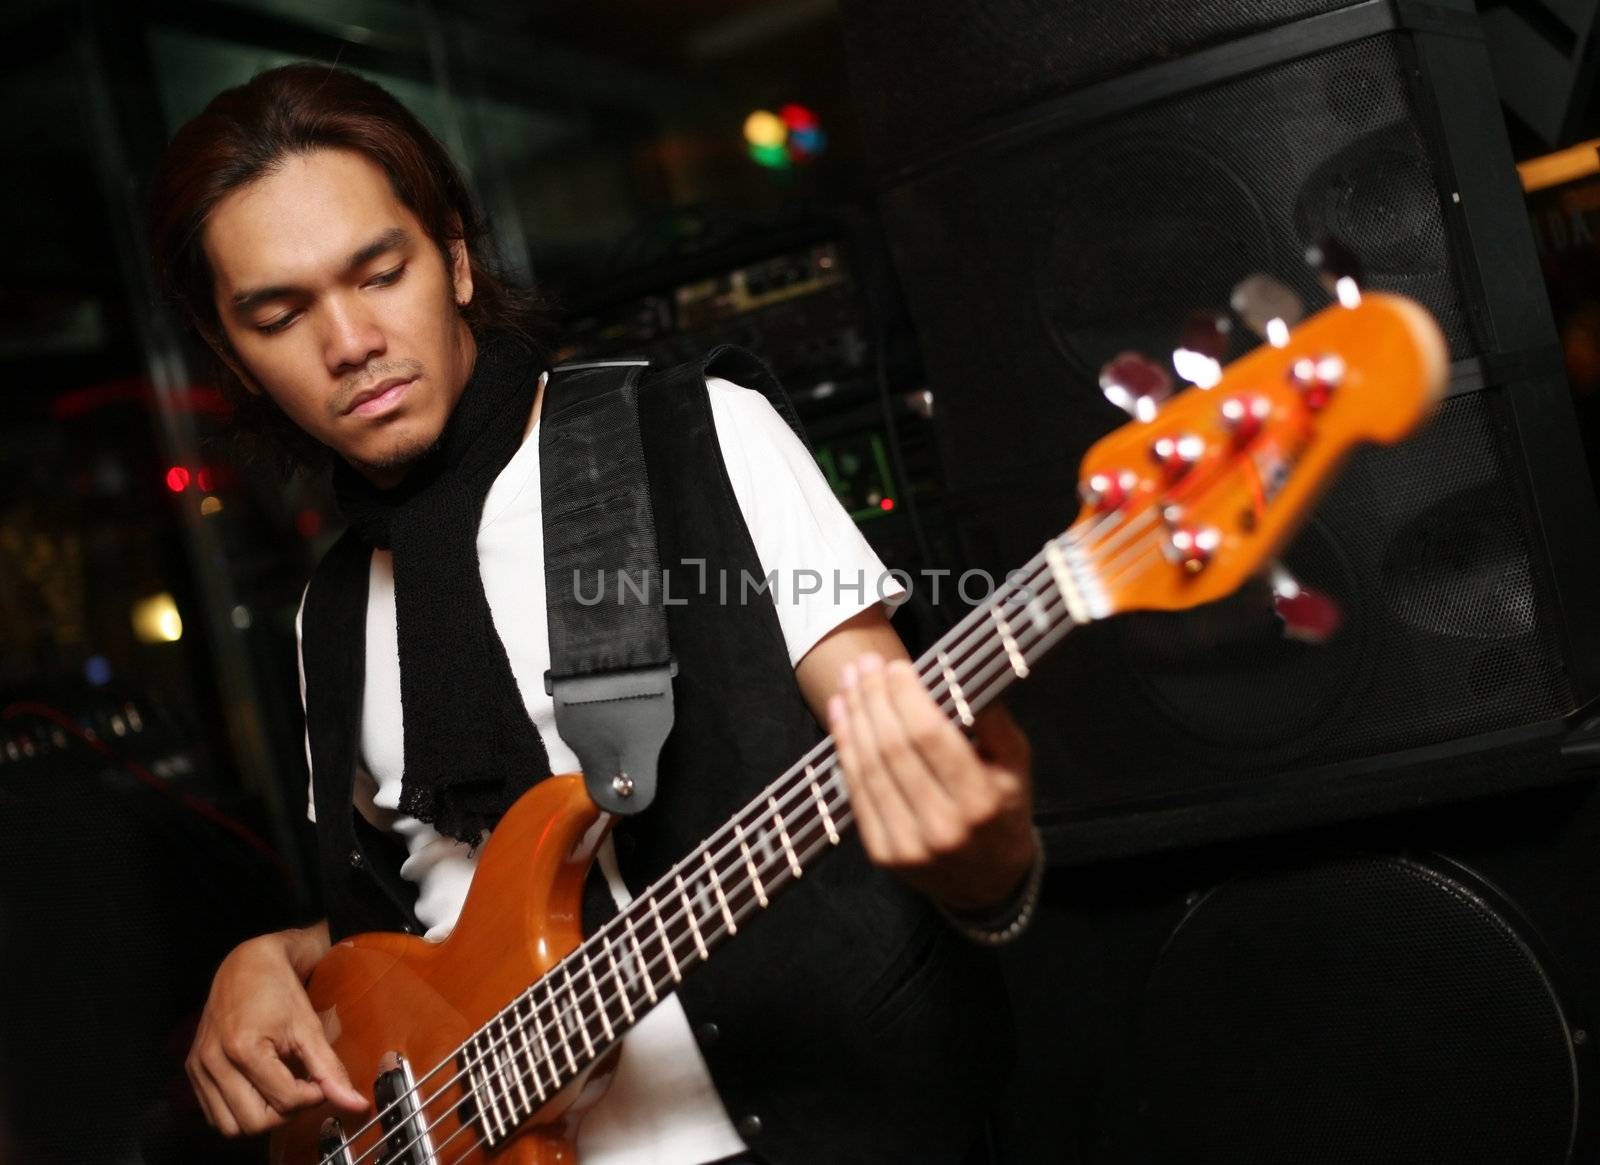 Young musician at an alive concert in a night club "La vida loka". Bali. Indonesia